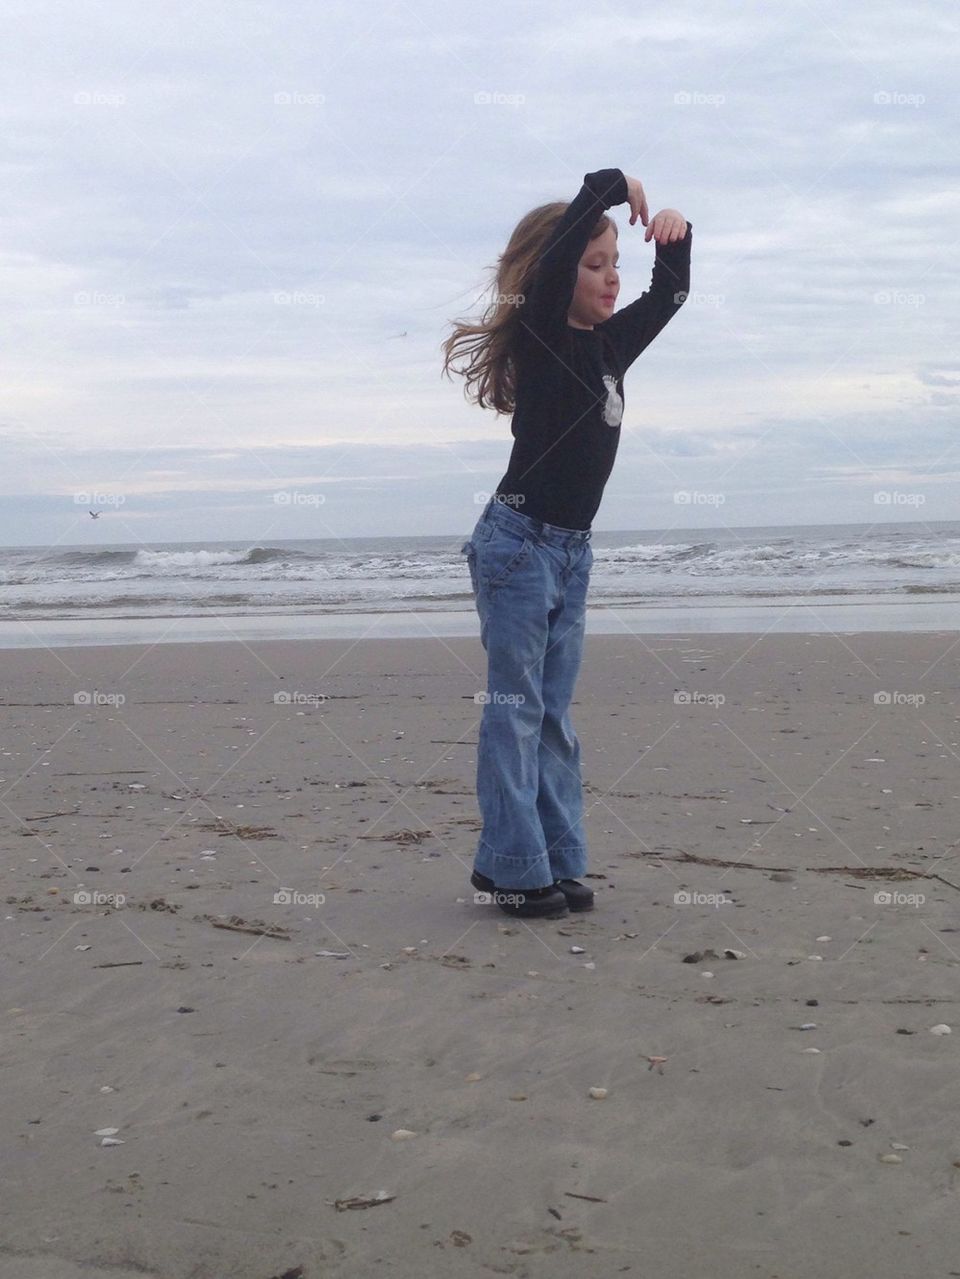 Dancing on the beach 